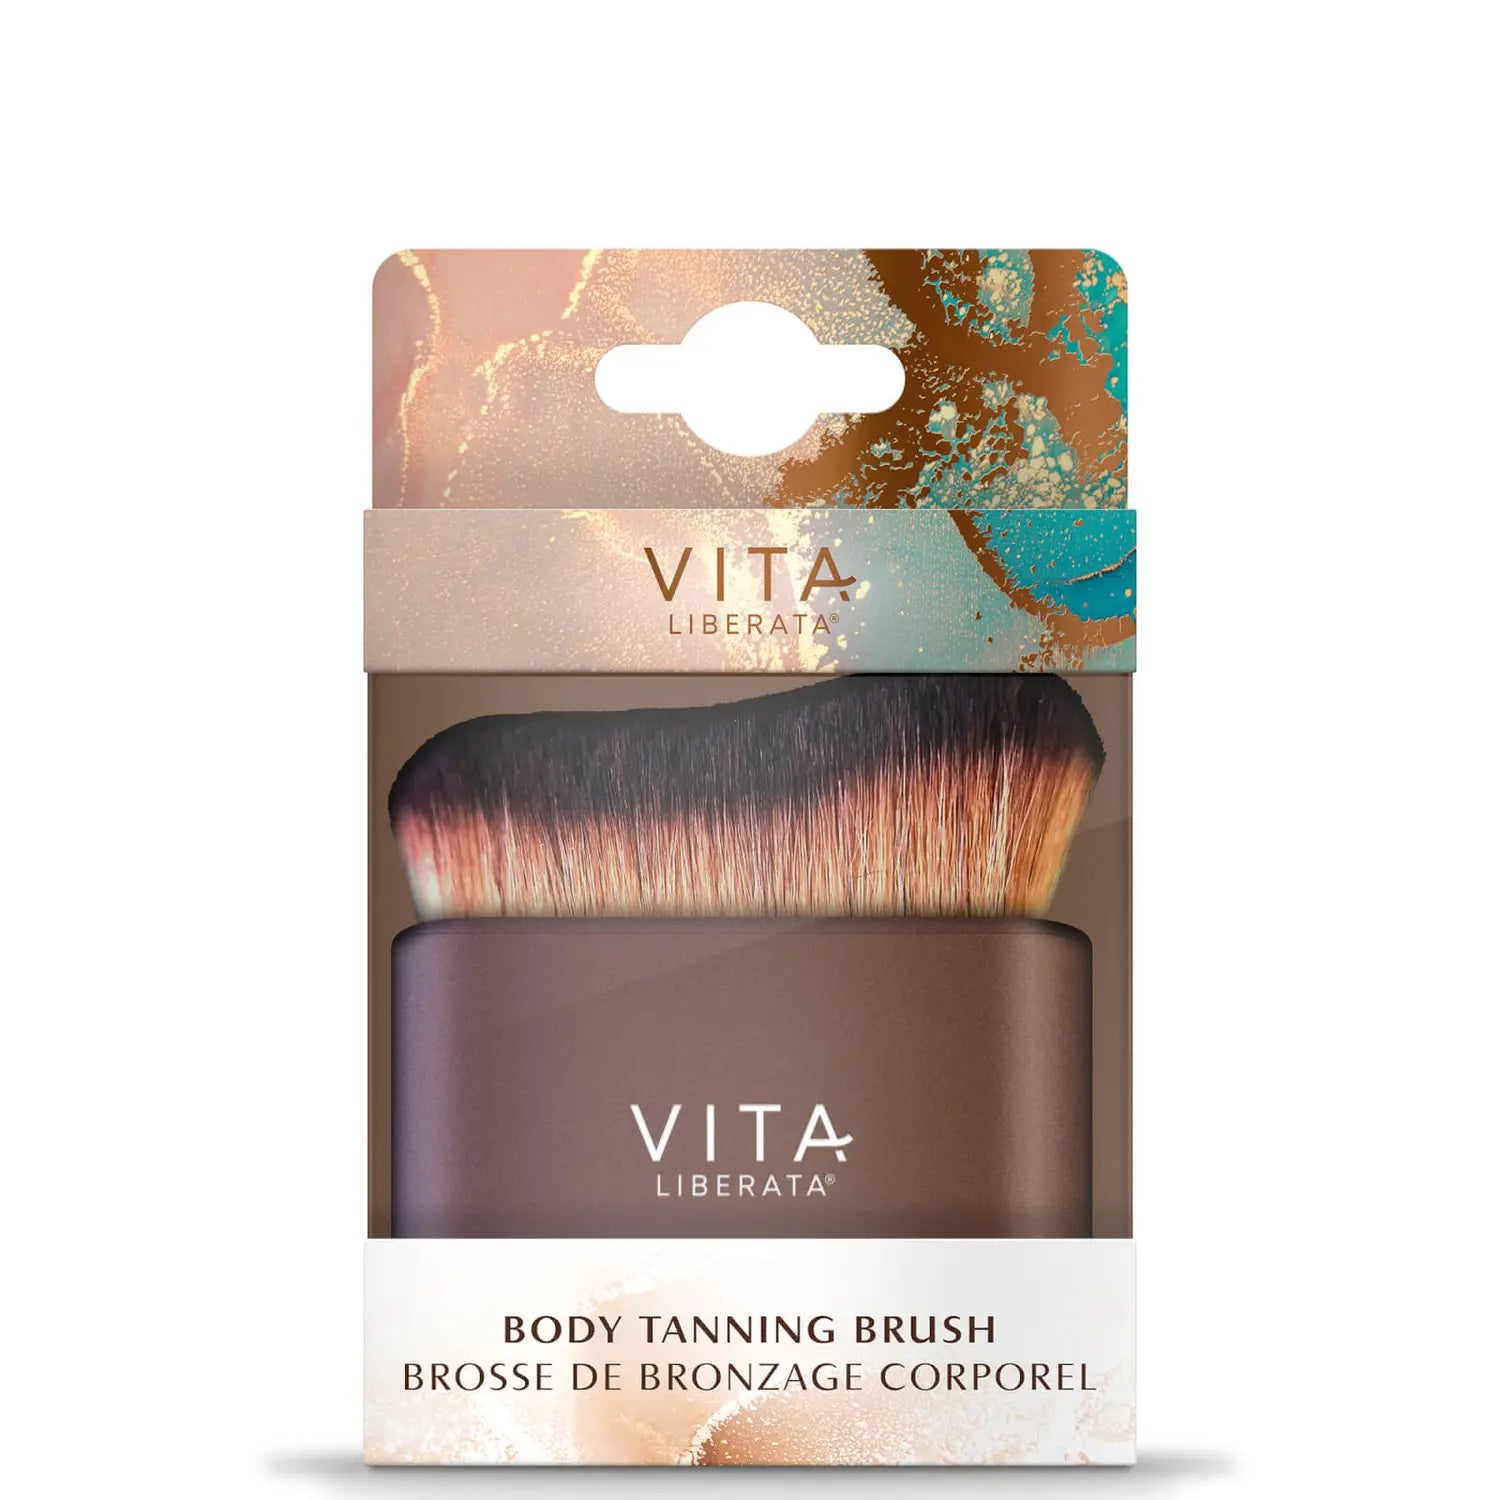 Vita Liberata Body Tanning Brush Image